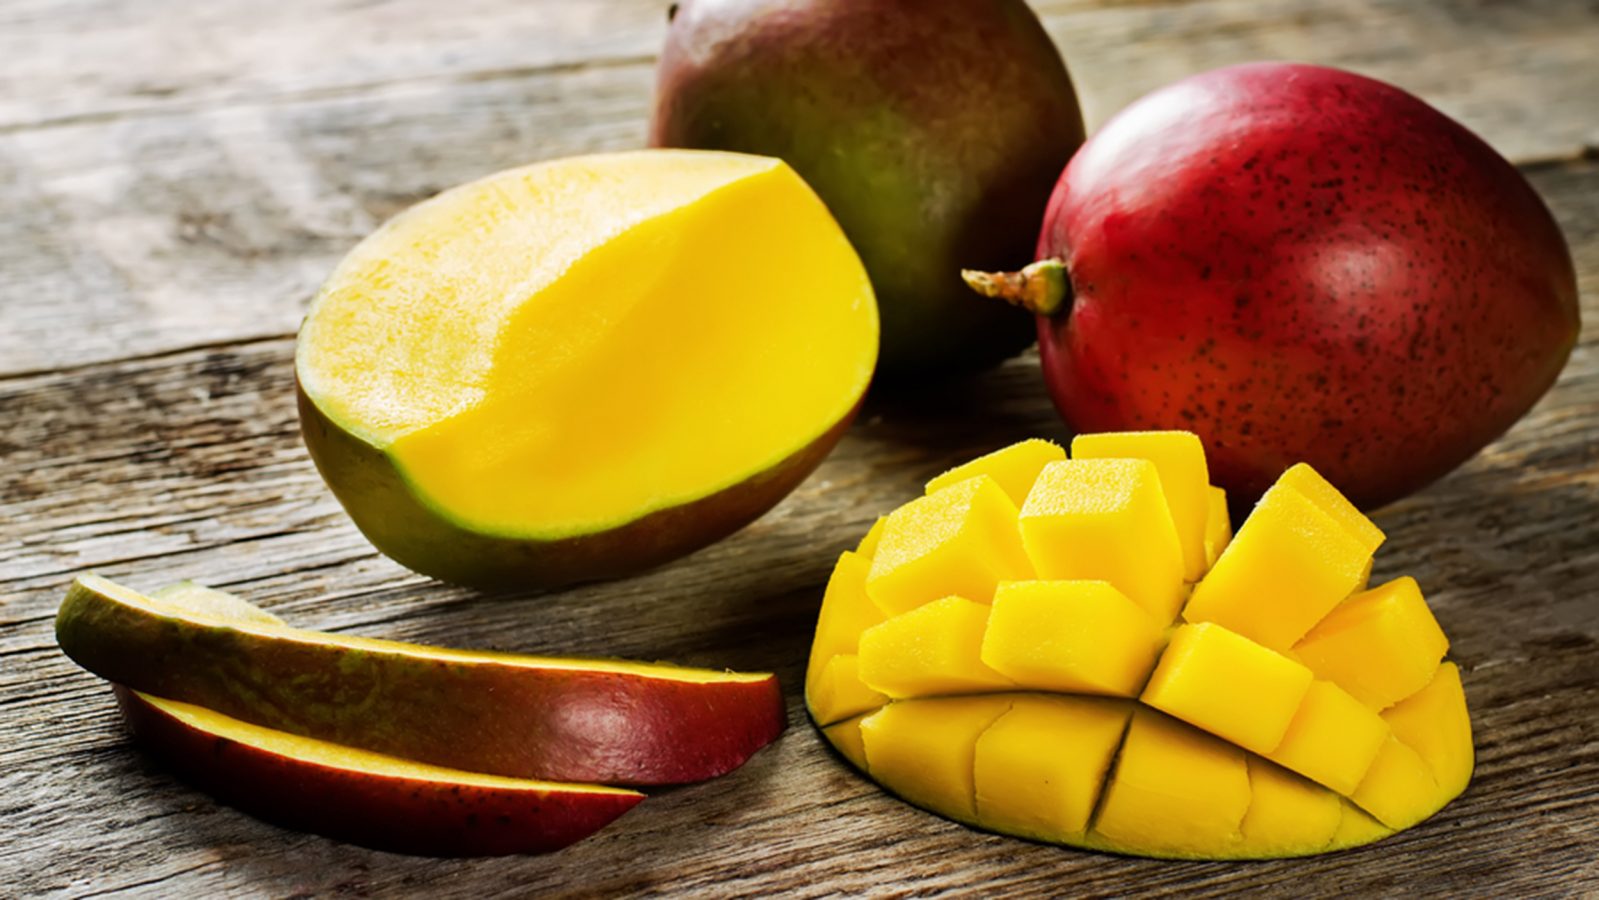 You got: Mango! What Fruit Am I? 🍊